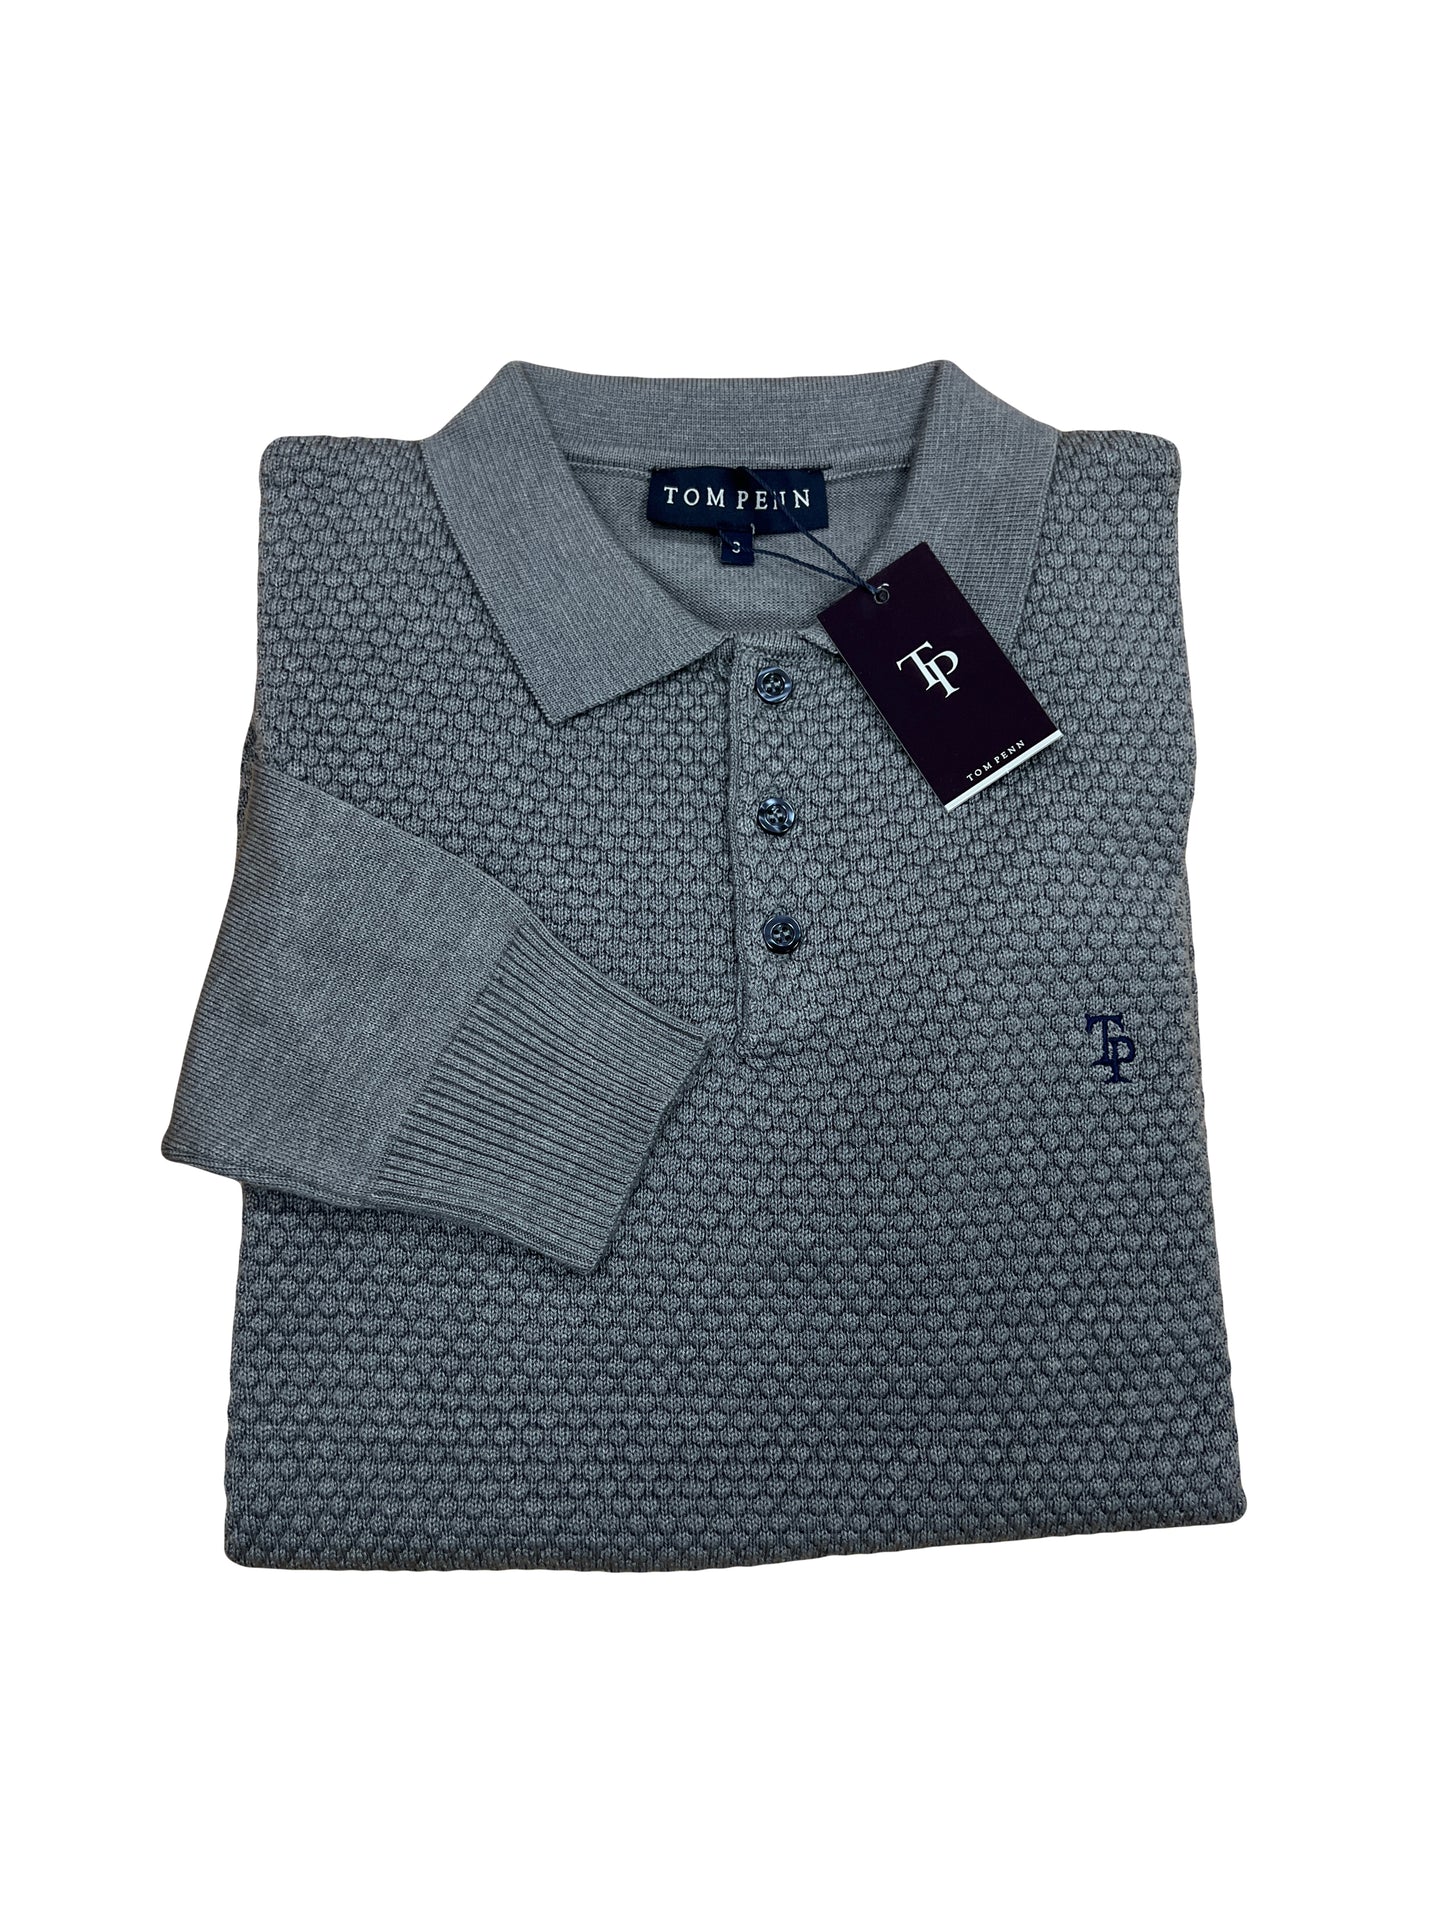 Tom Penn TP054 Knitted Long Sleeve Polo Shirt - Grey